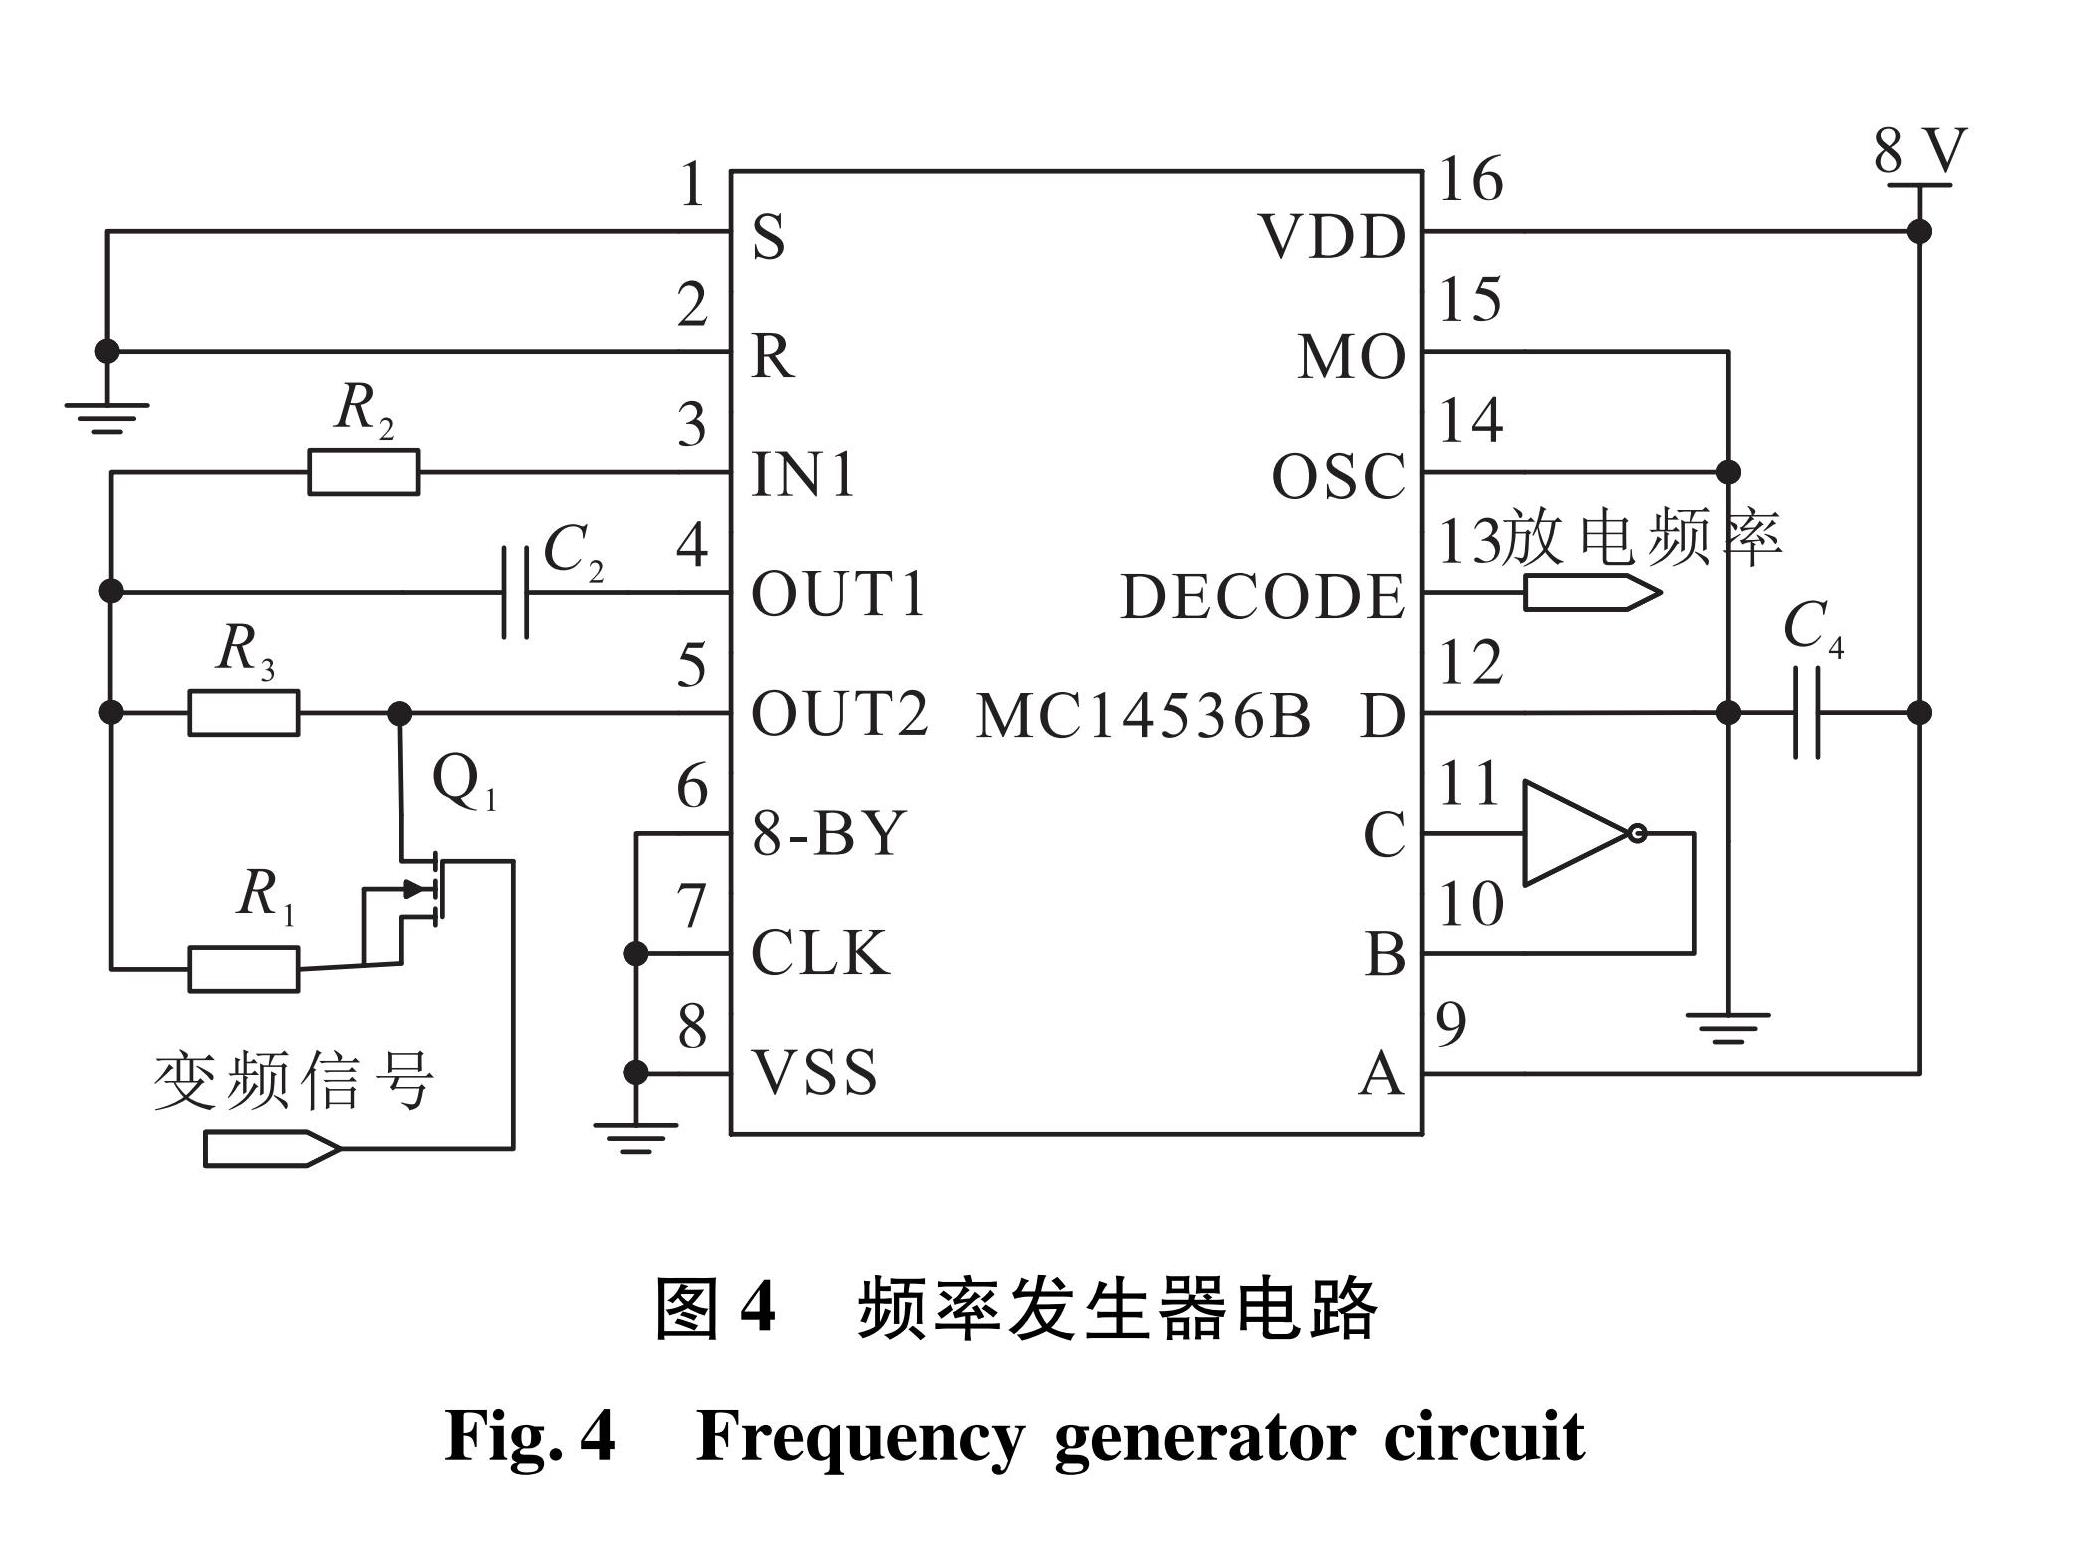 图4 频率发生器电路<br/>Fig.4 Frequency generator circuit